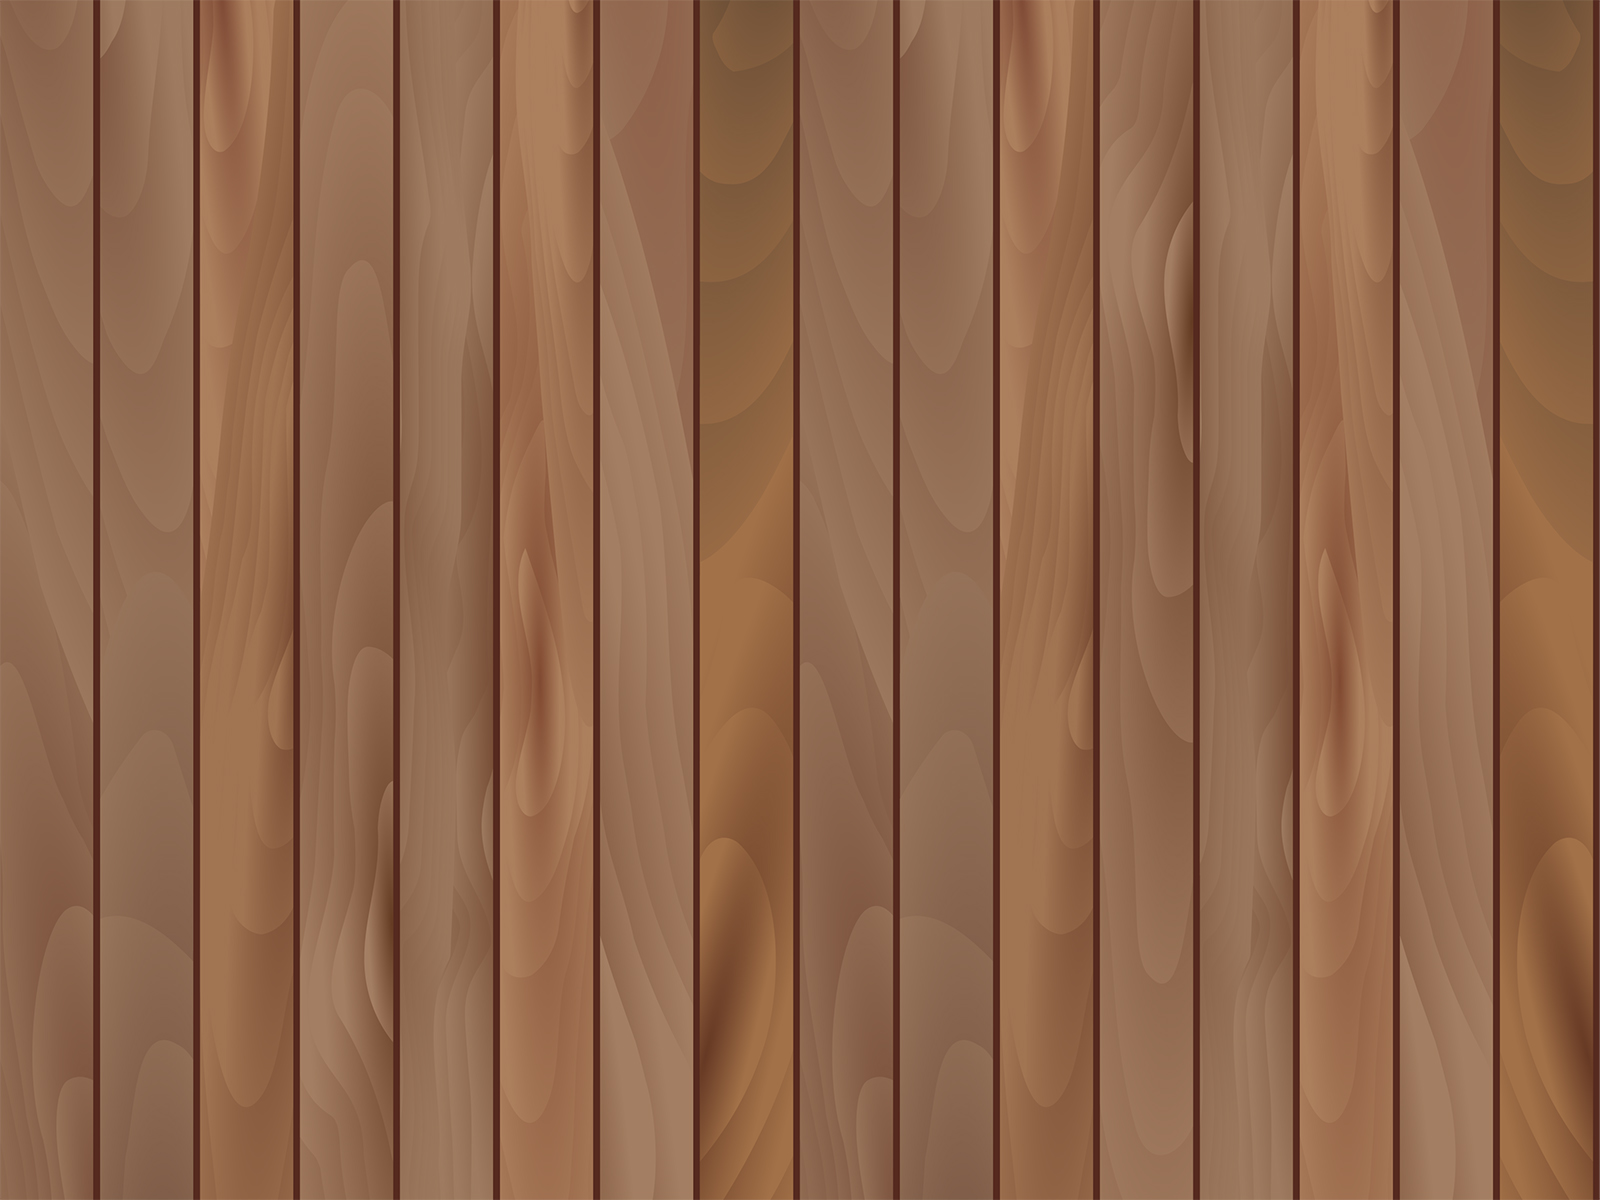 Wood Texture Backgrounds | Cartoon Templates | Free PPT 